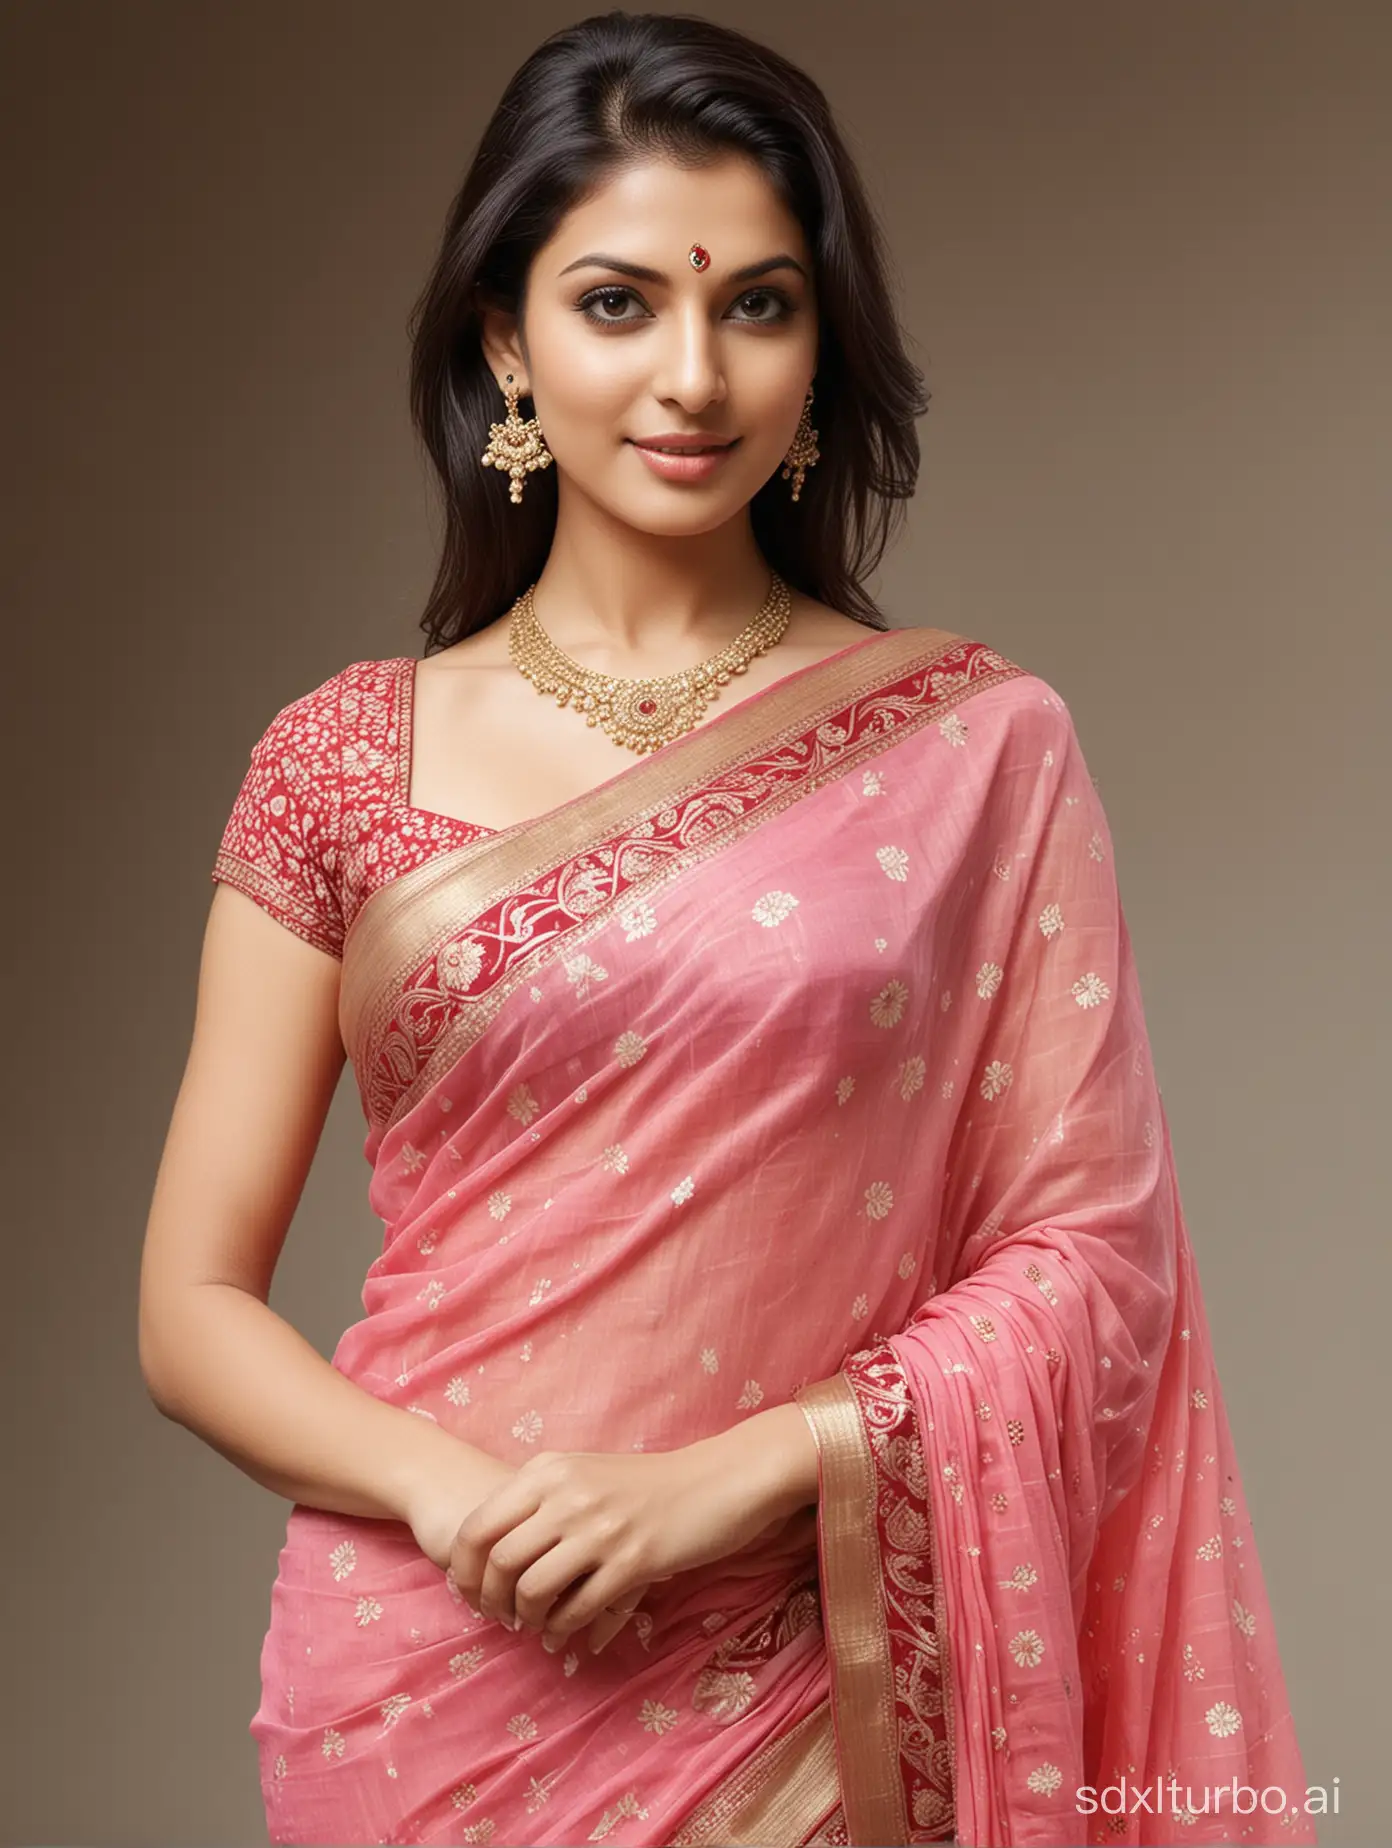 Most beautiful Indian women wearing saree